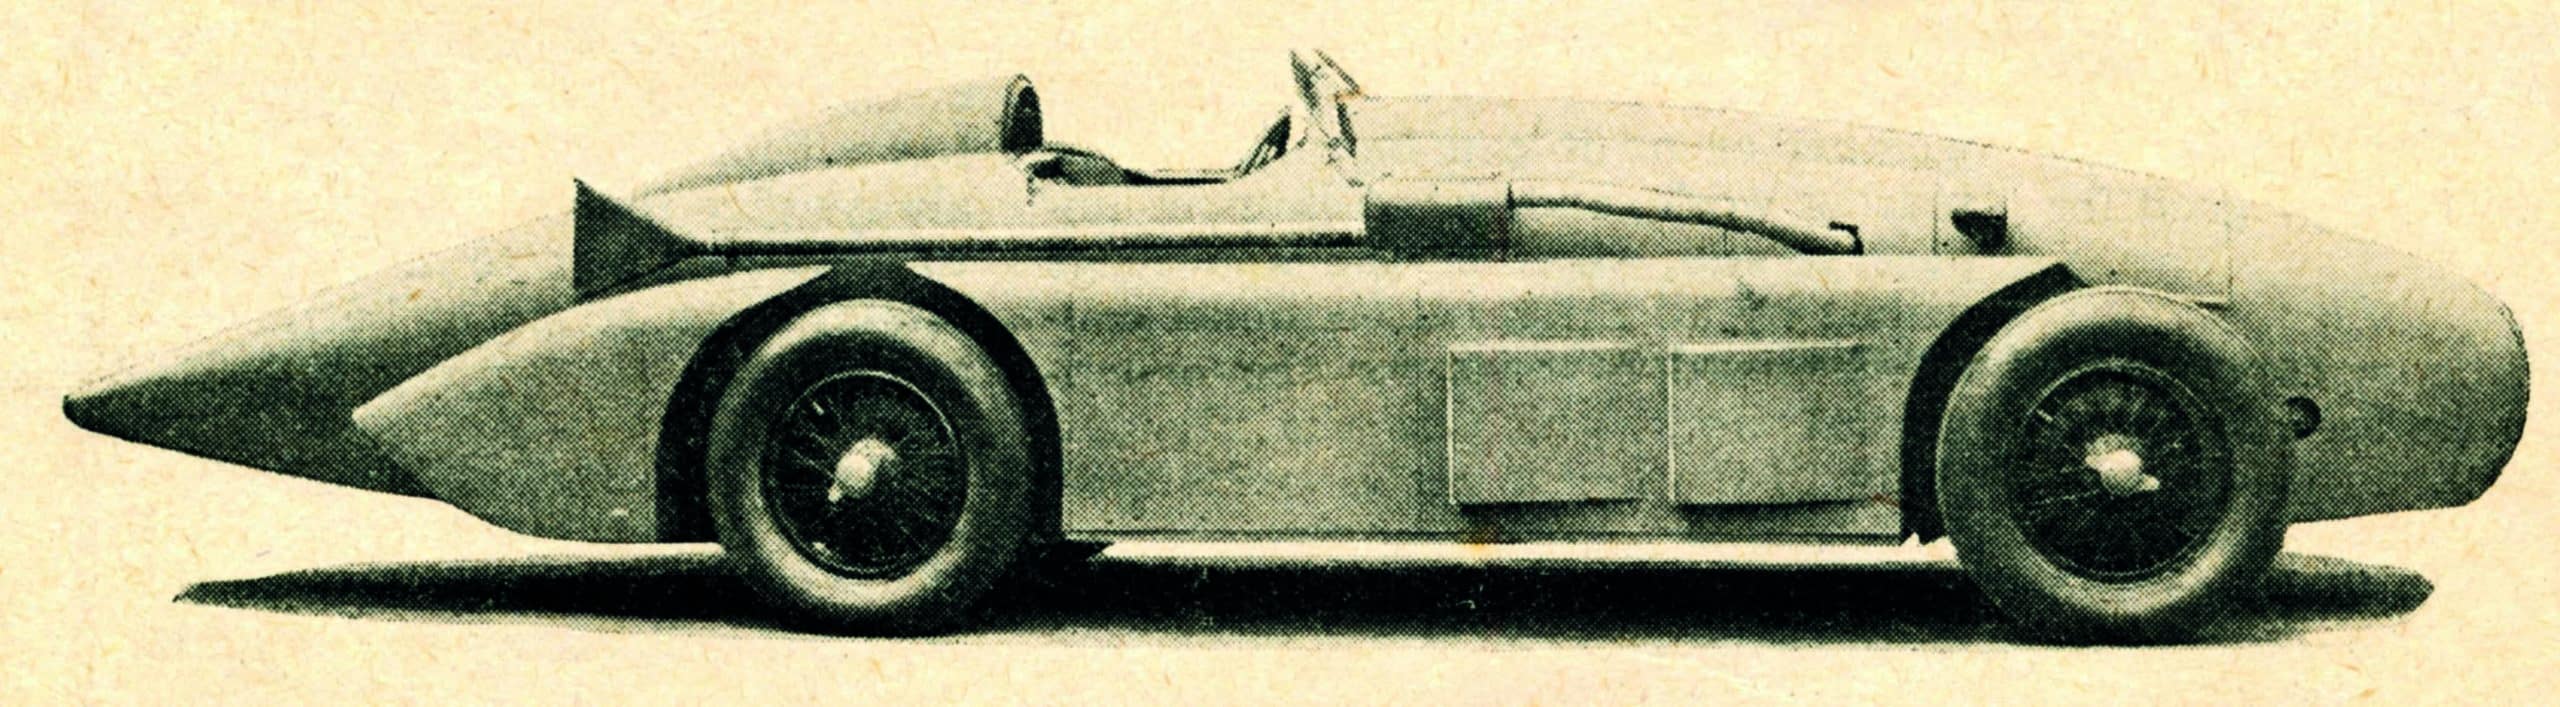 Graham-Paige racing car